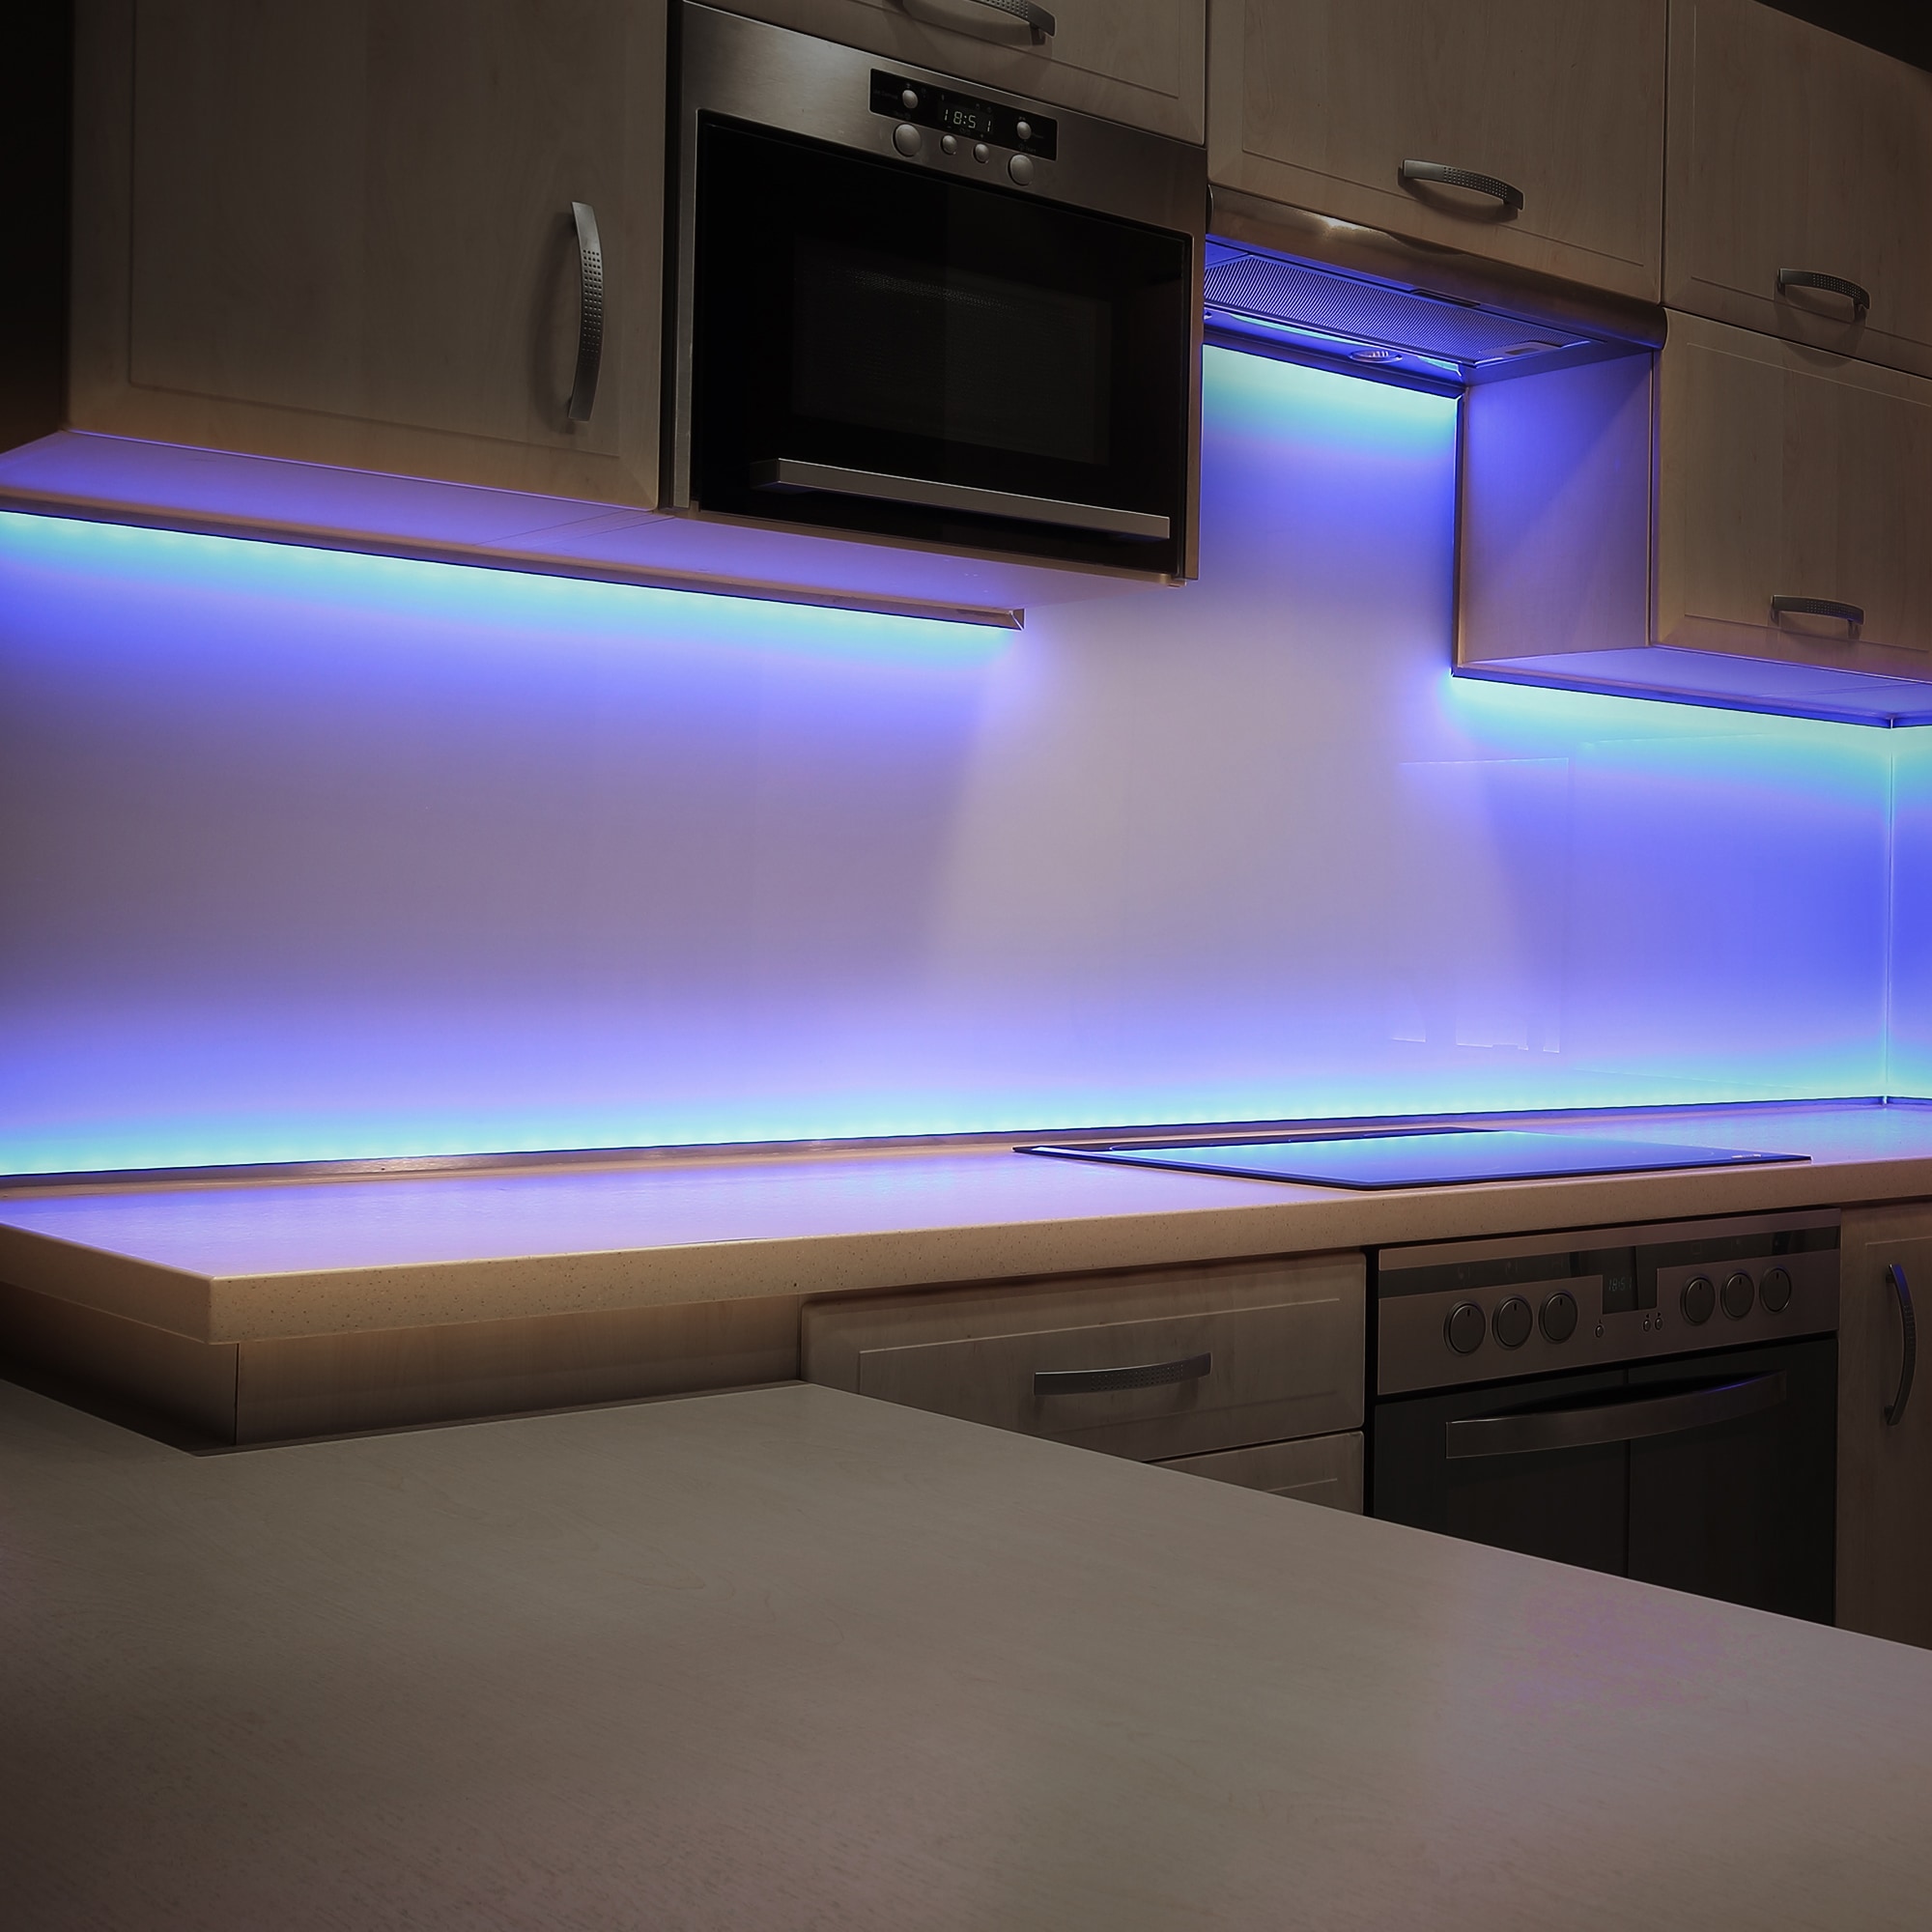 B.K.Licht LED-Streifen, 3m Smart Home LED Band/Stripes dimmbar mit WiFi App-Steuerung